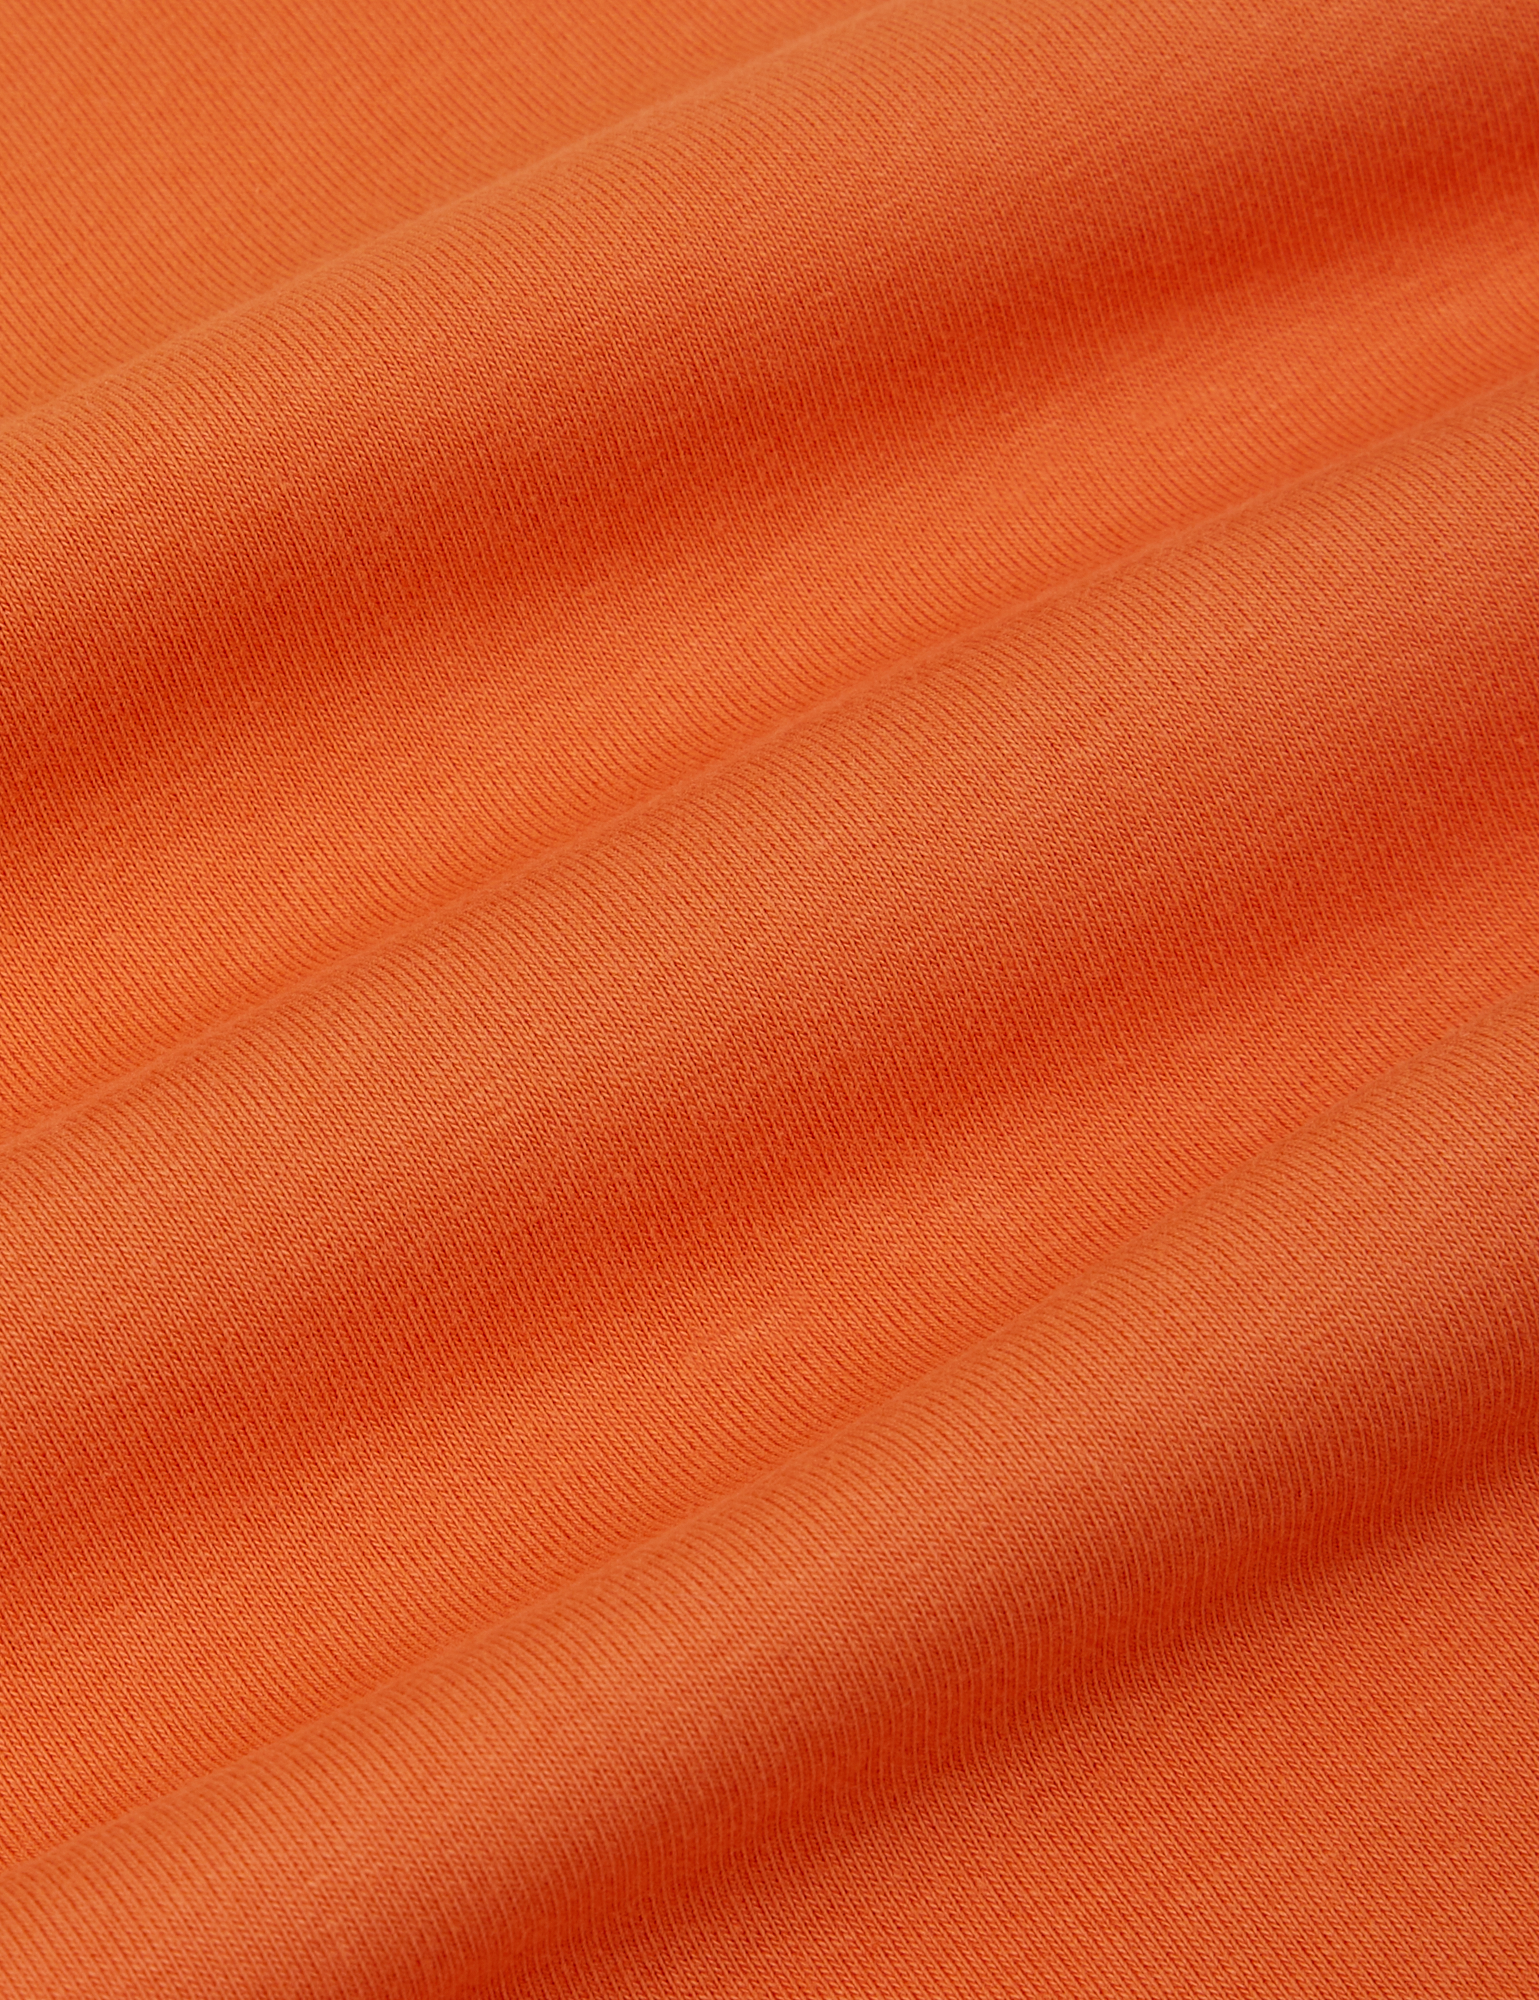 Racerback Tank in Sunset Orange fabric detail close up